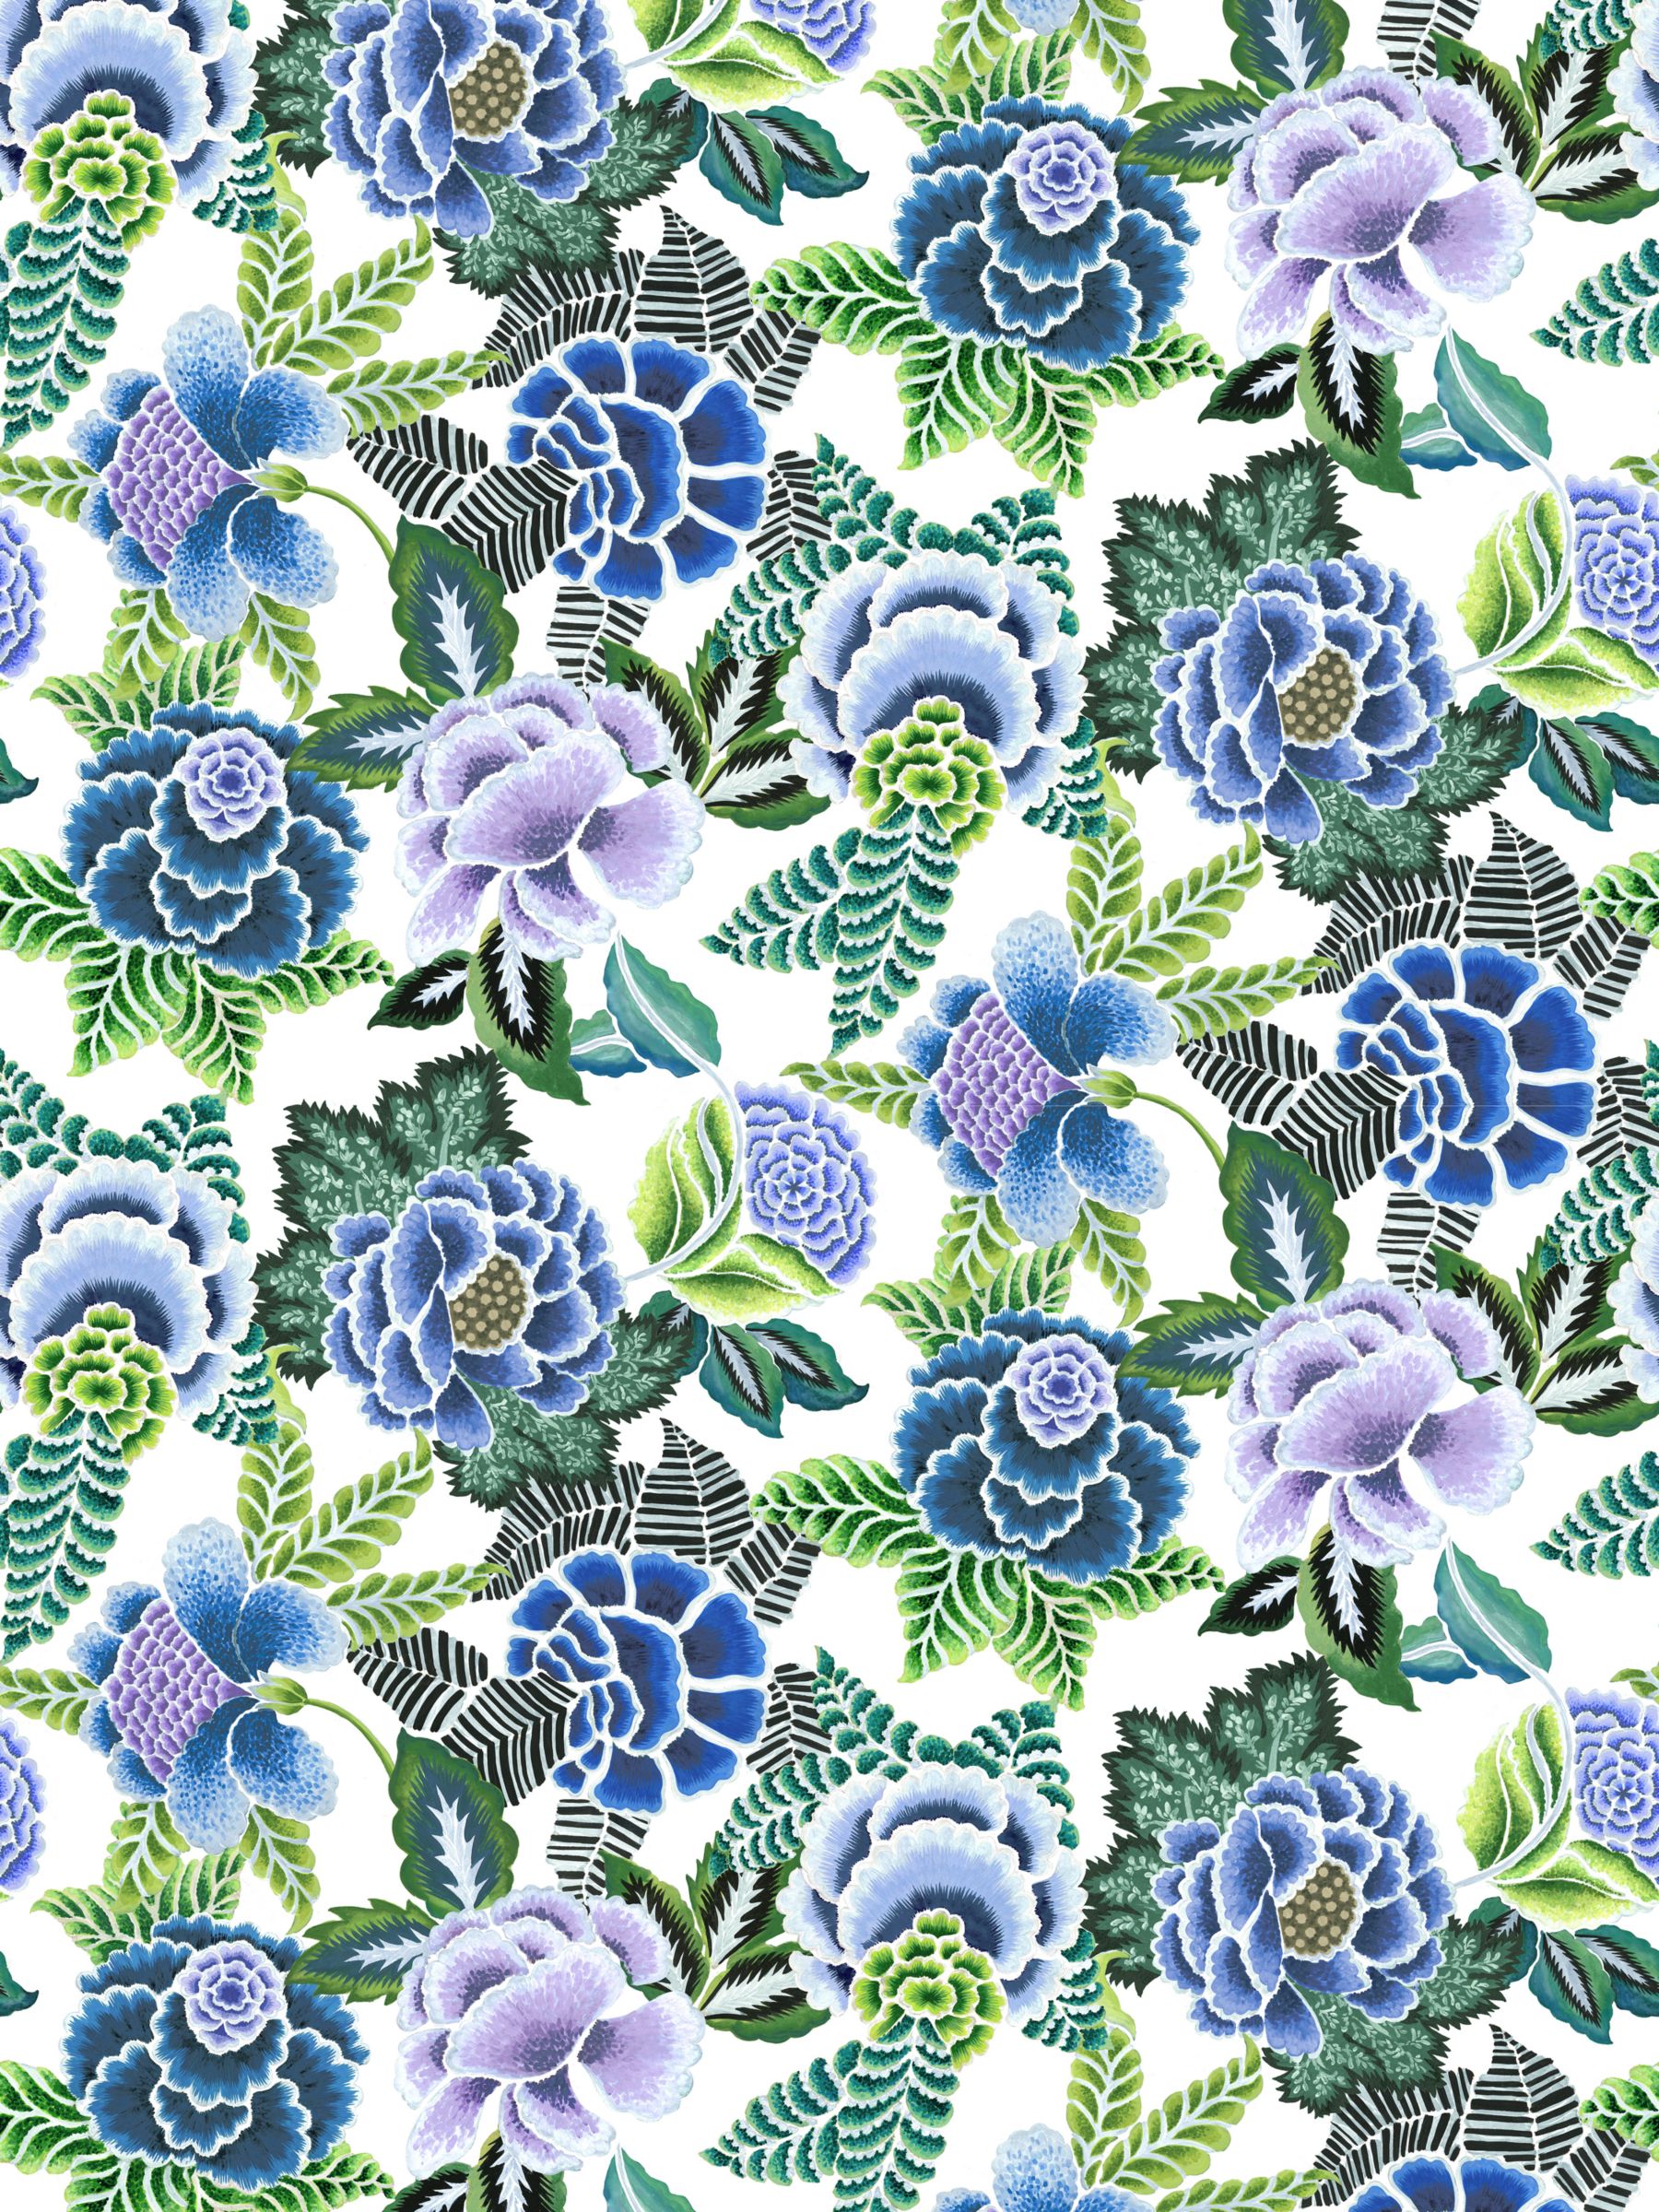 Designers Guild Rose De Damas Printed Floral Cotton Furnishing Fabric, Cobalt